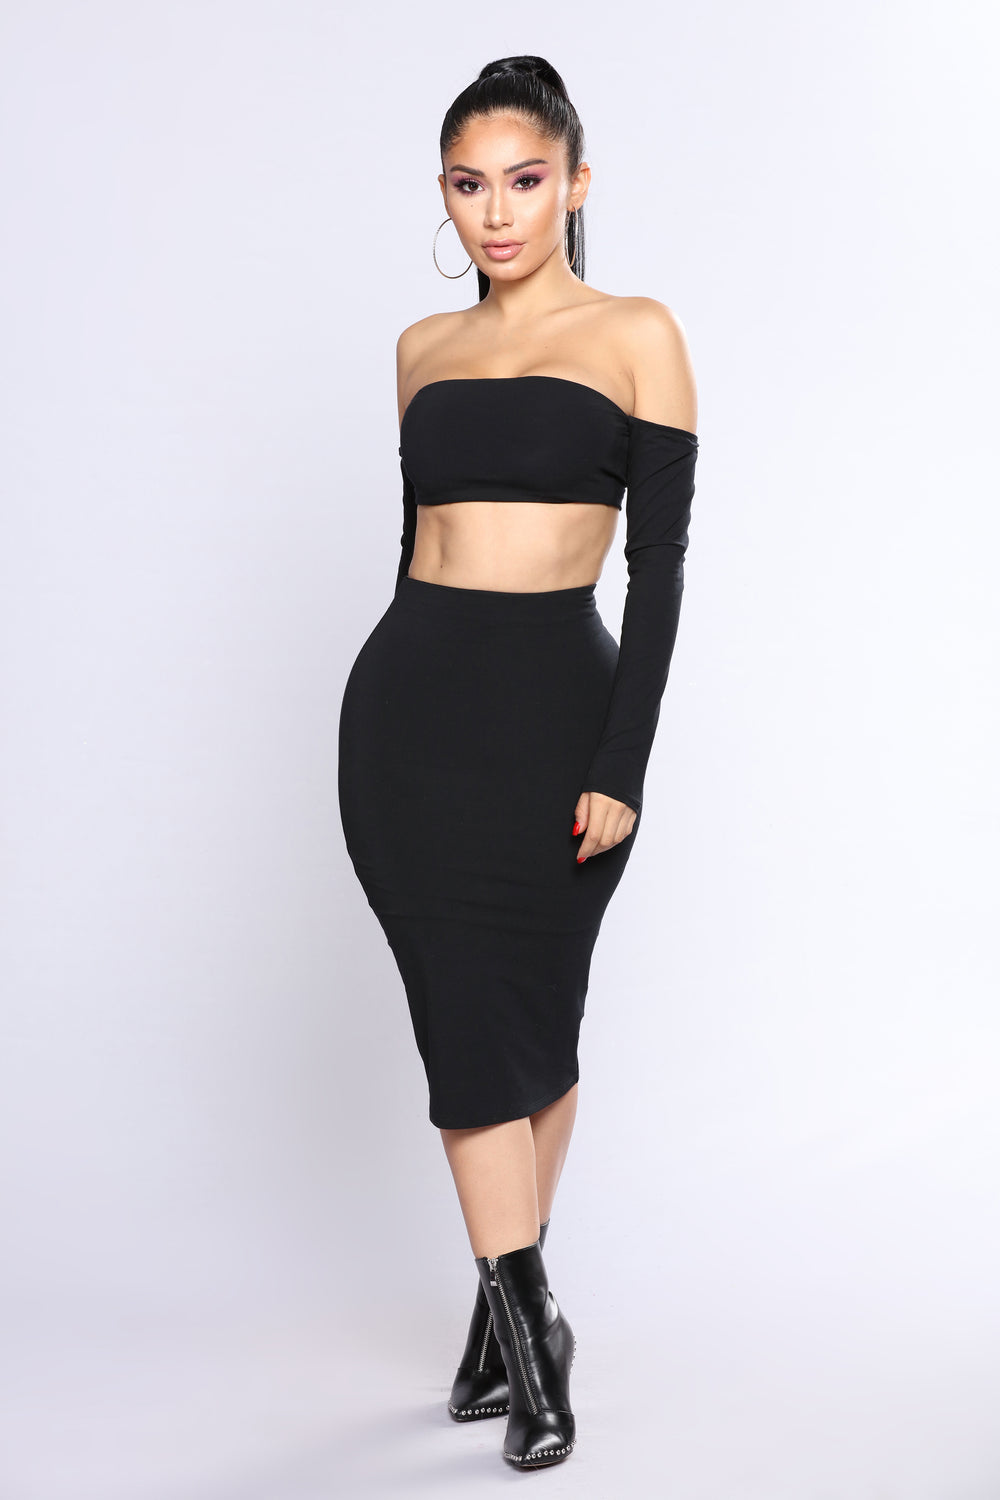 Livia Skirt Set - Black